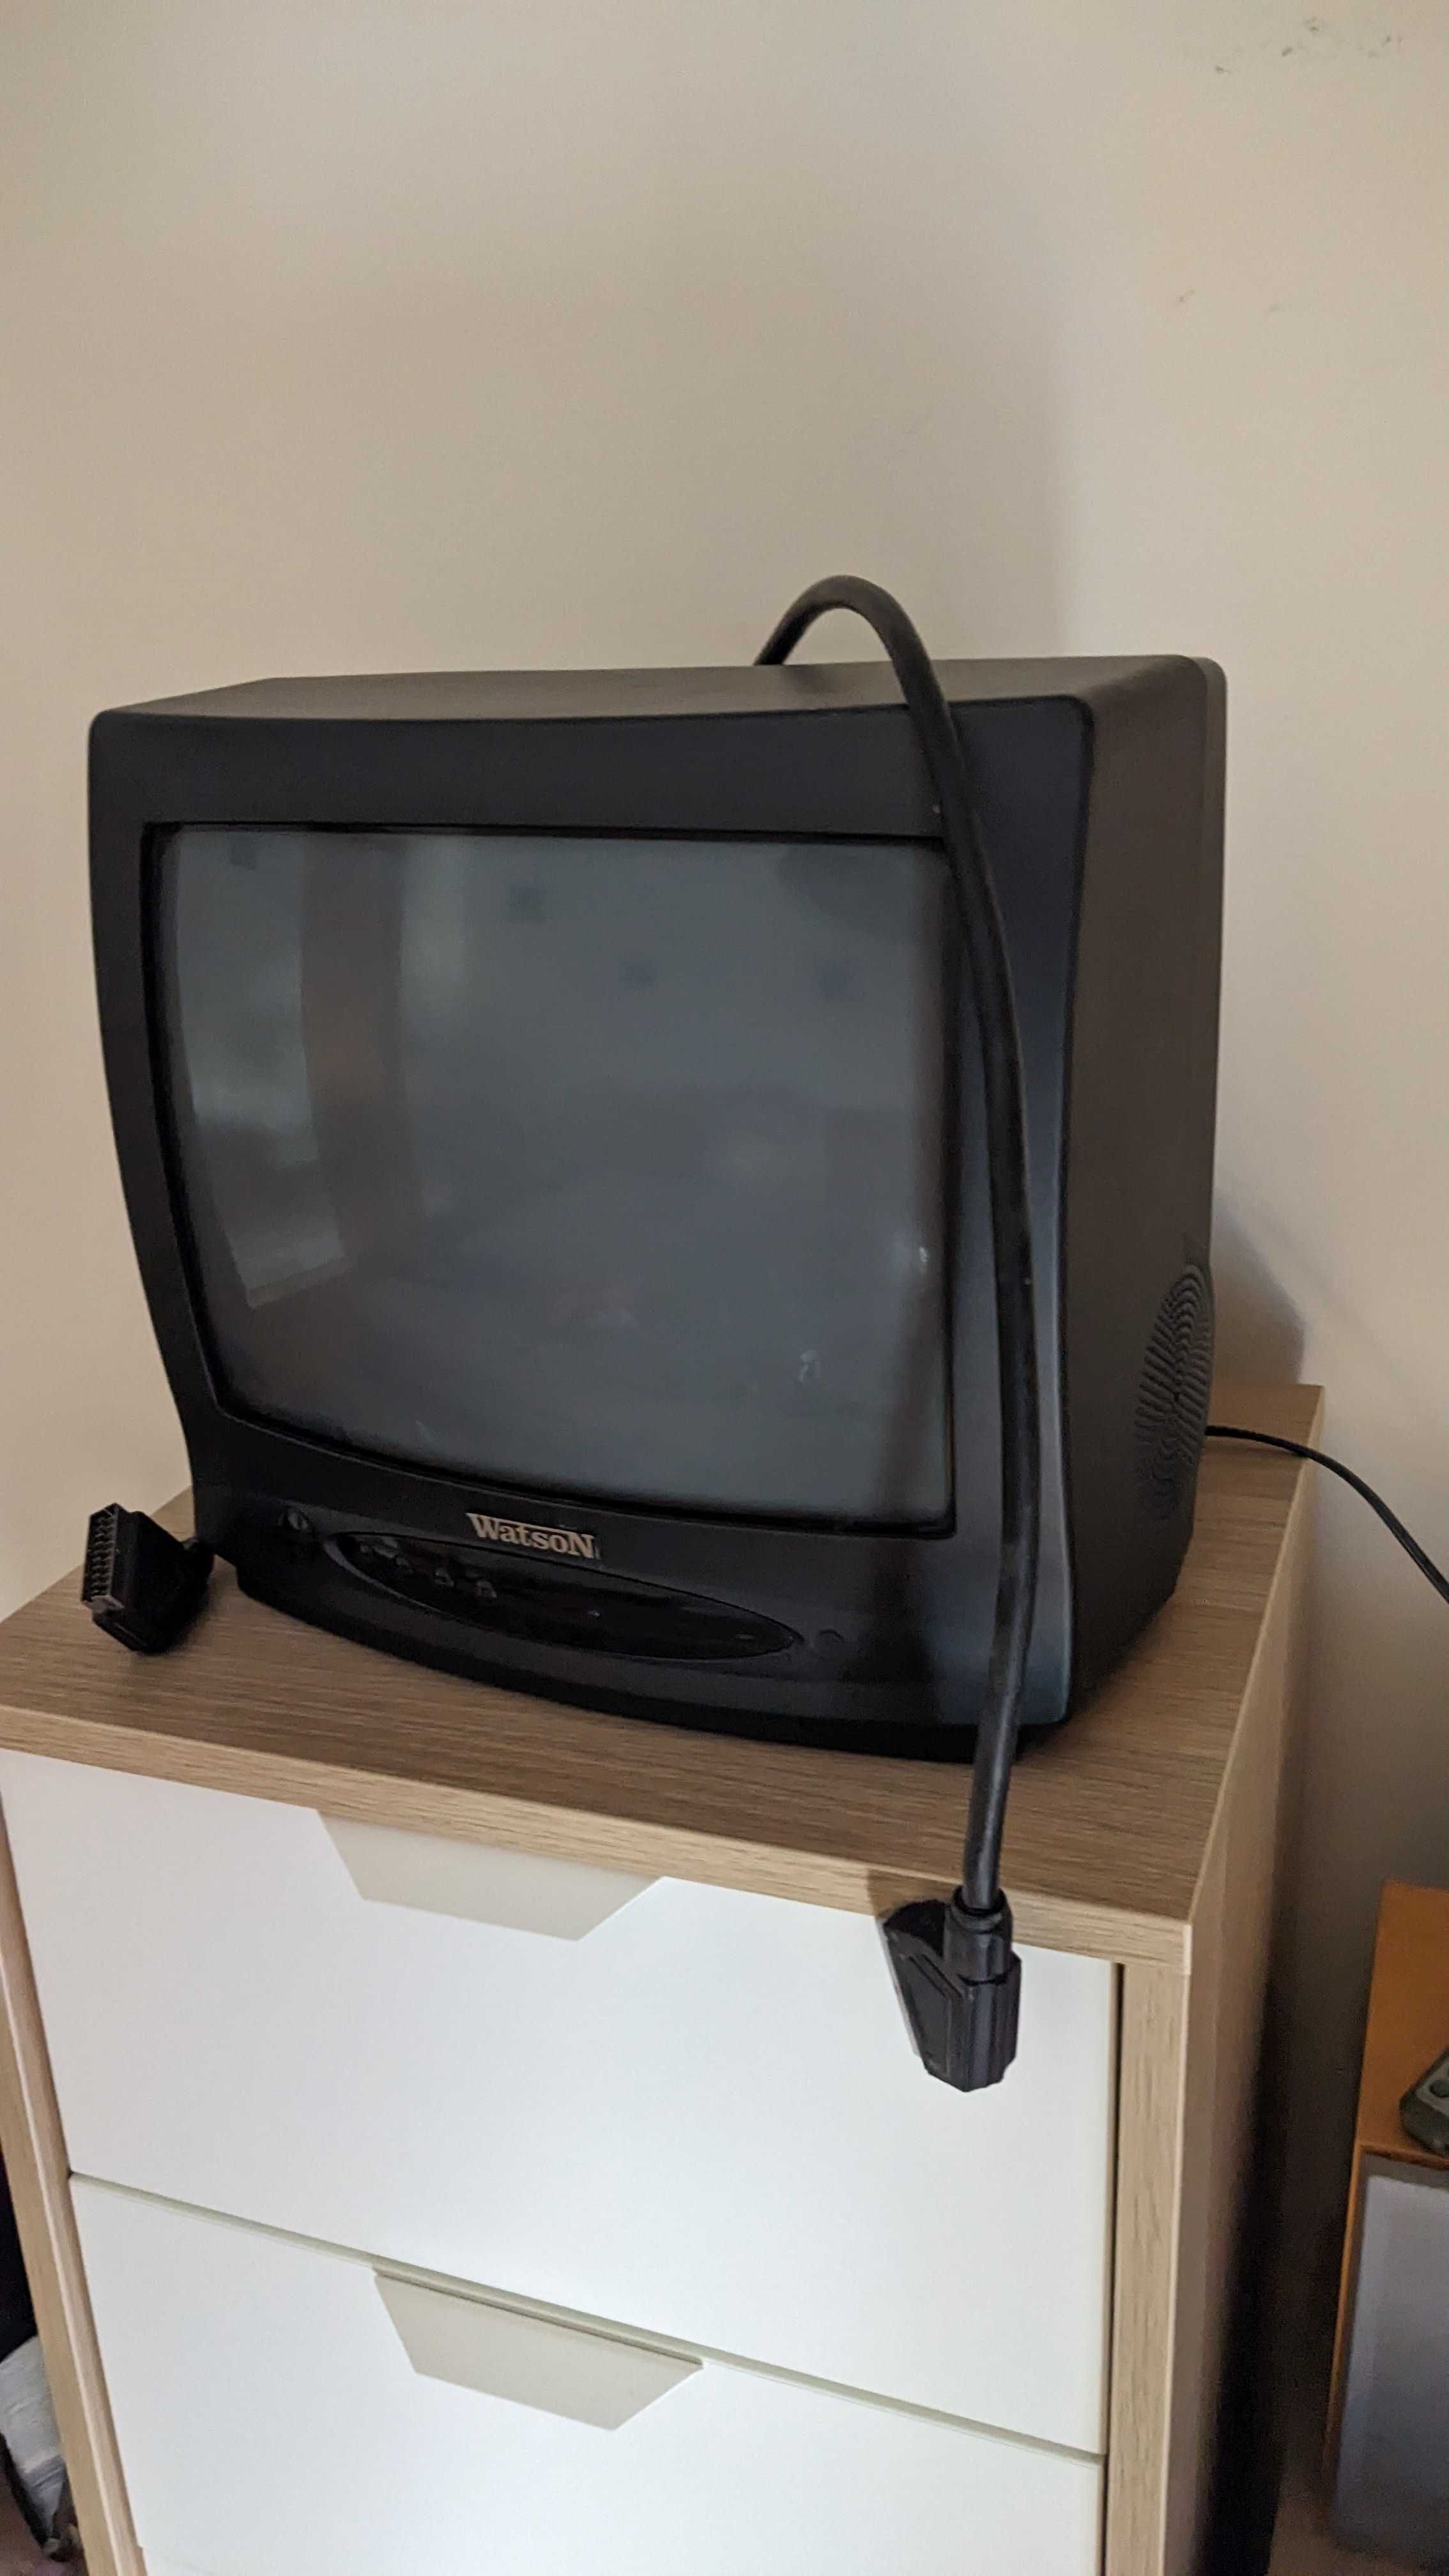 2 televisores pequenos de caixa